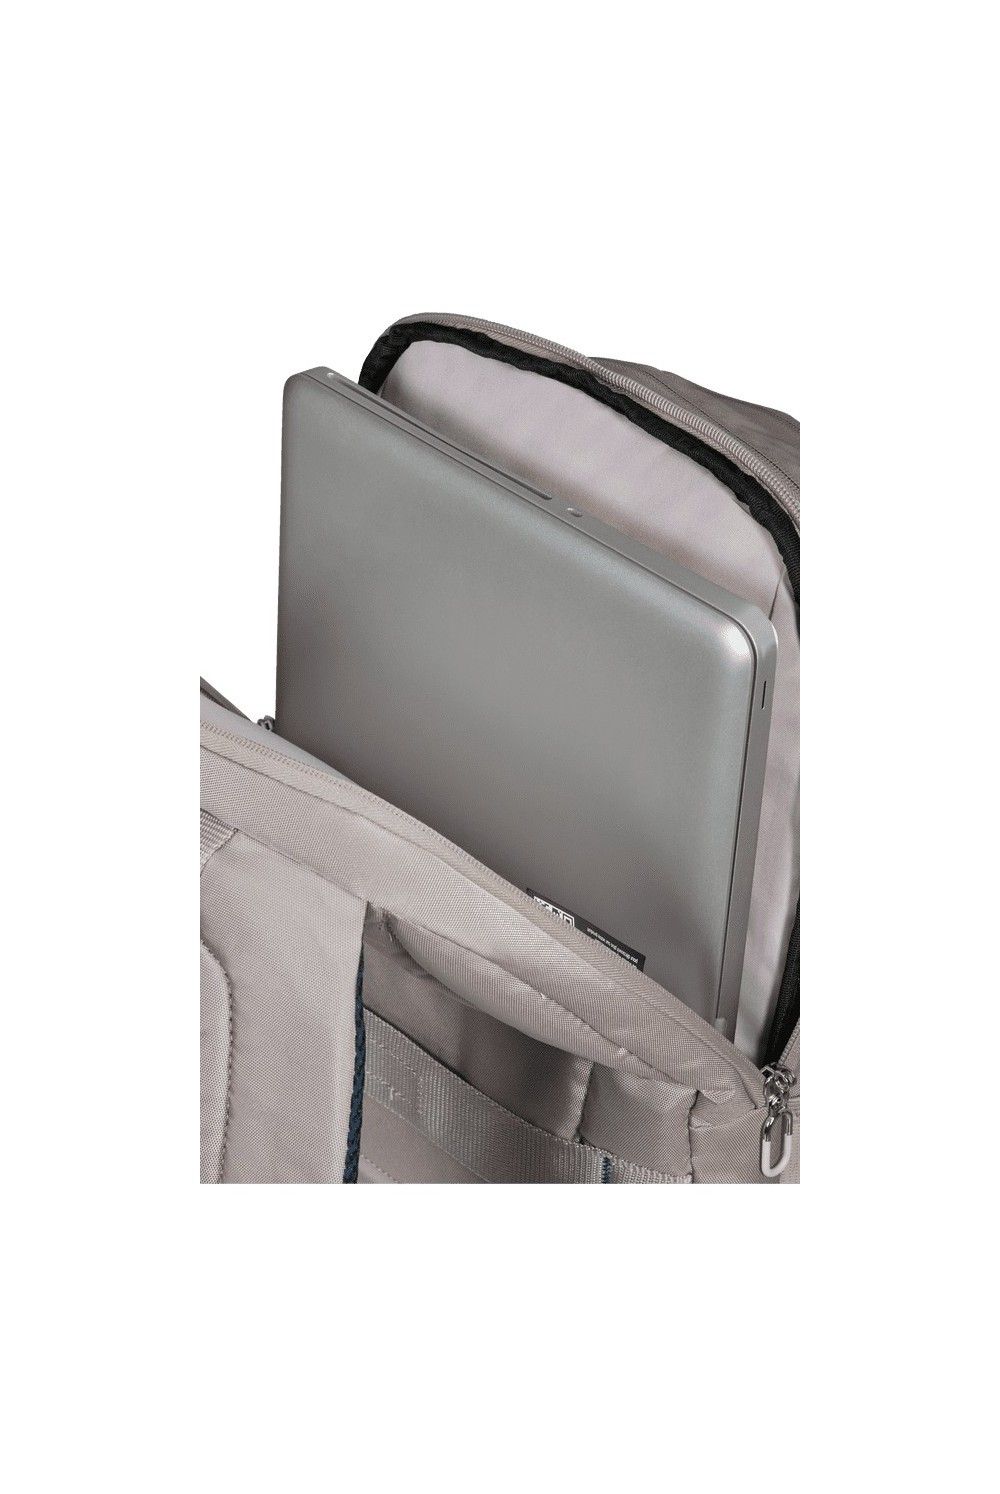 Samsonite Karissa Biz 2 laptop backpack 15.6 inches